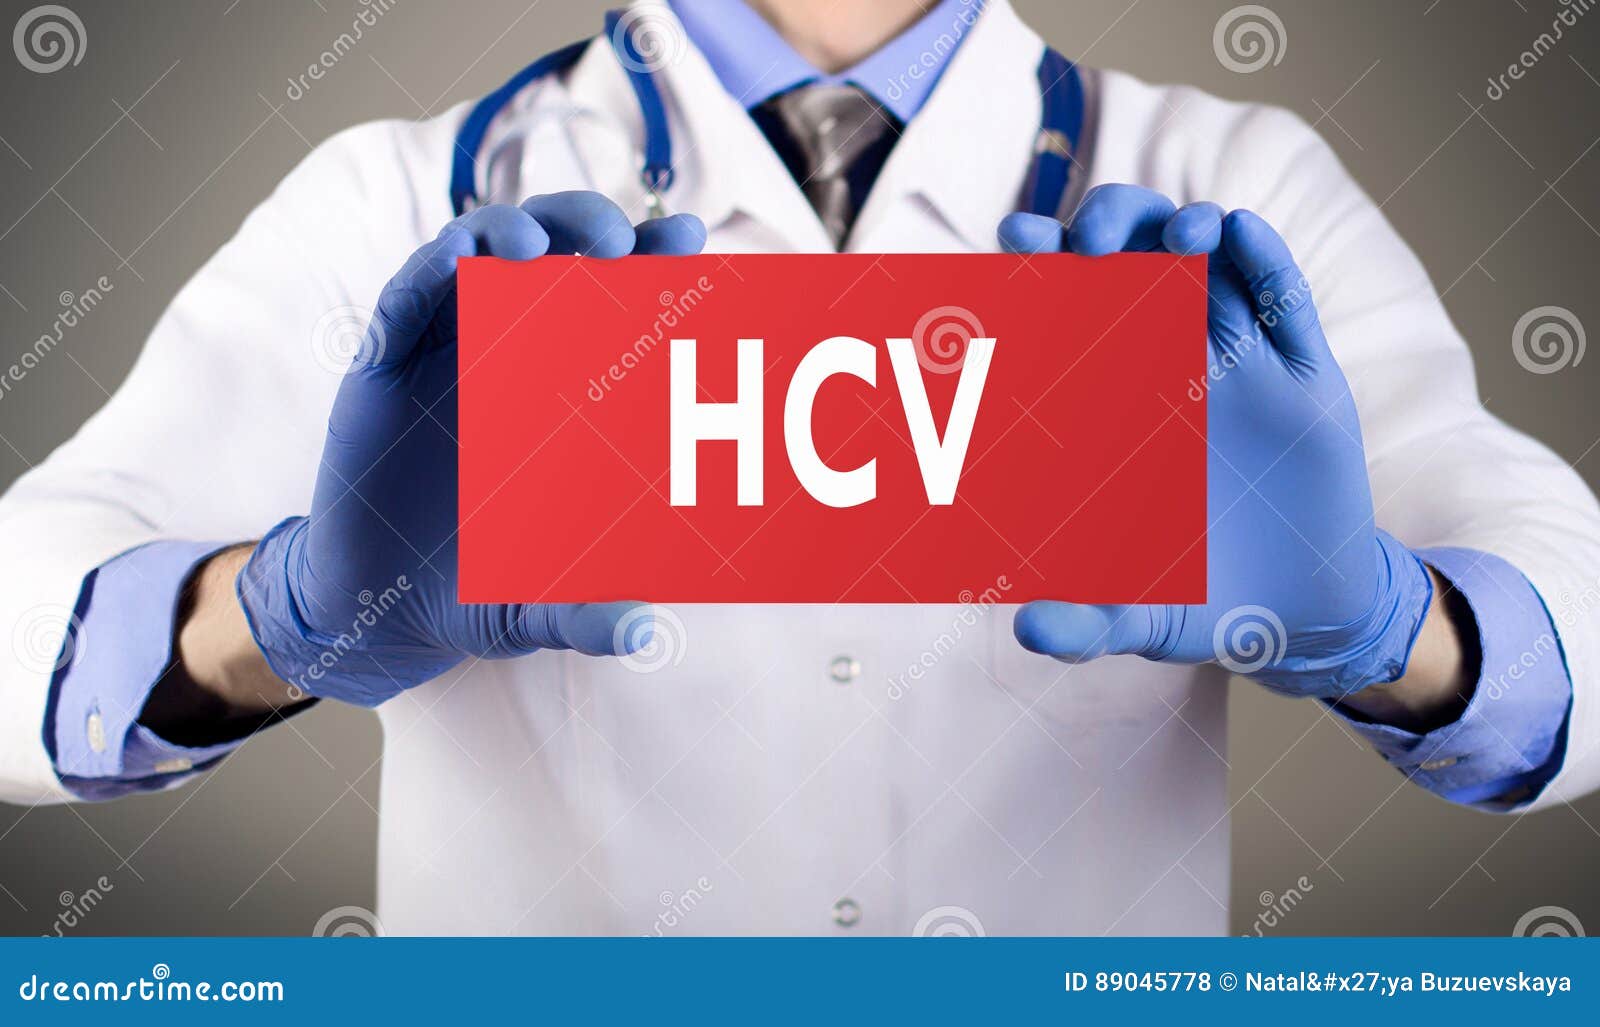 hcv hepatitis c virus